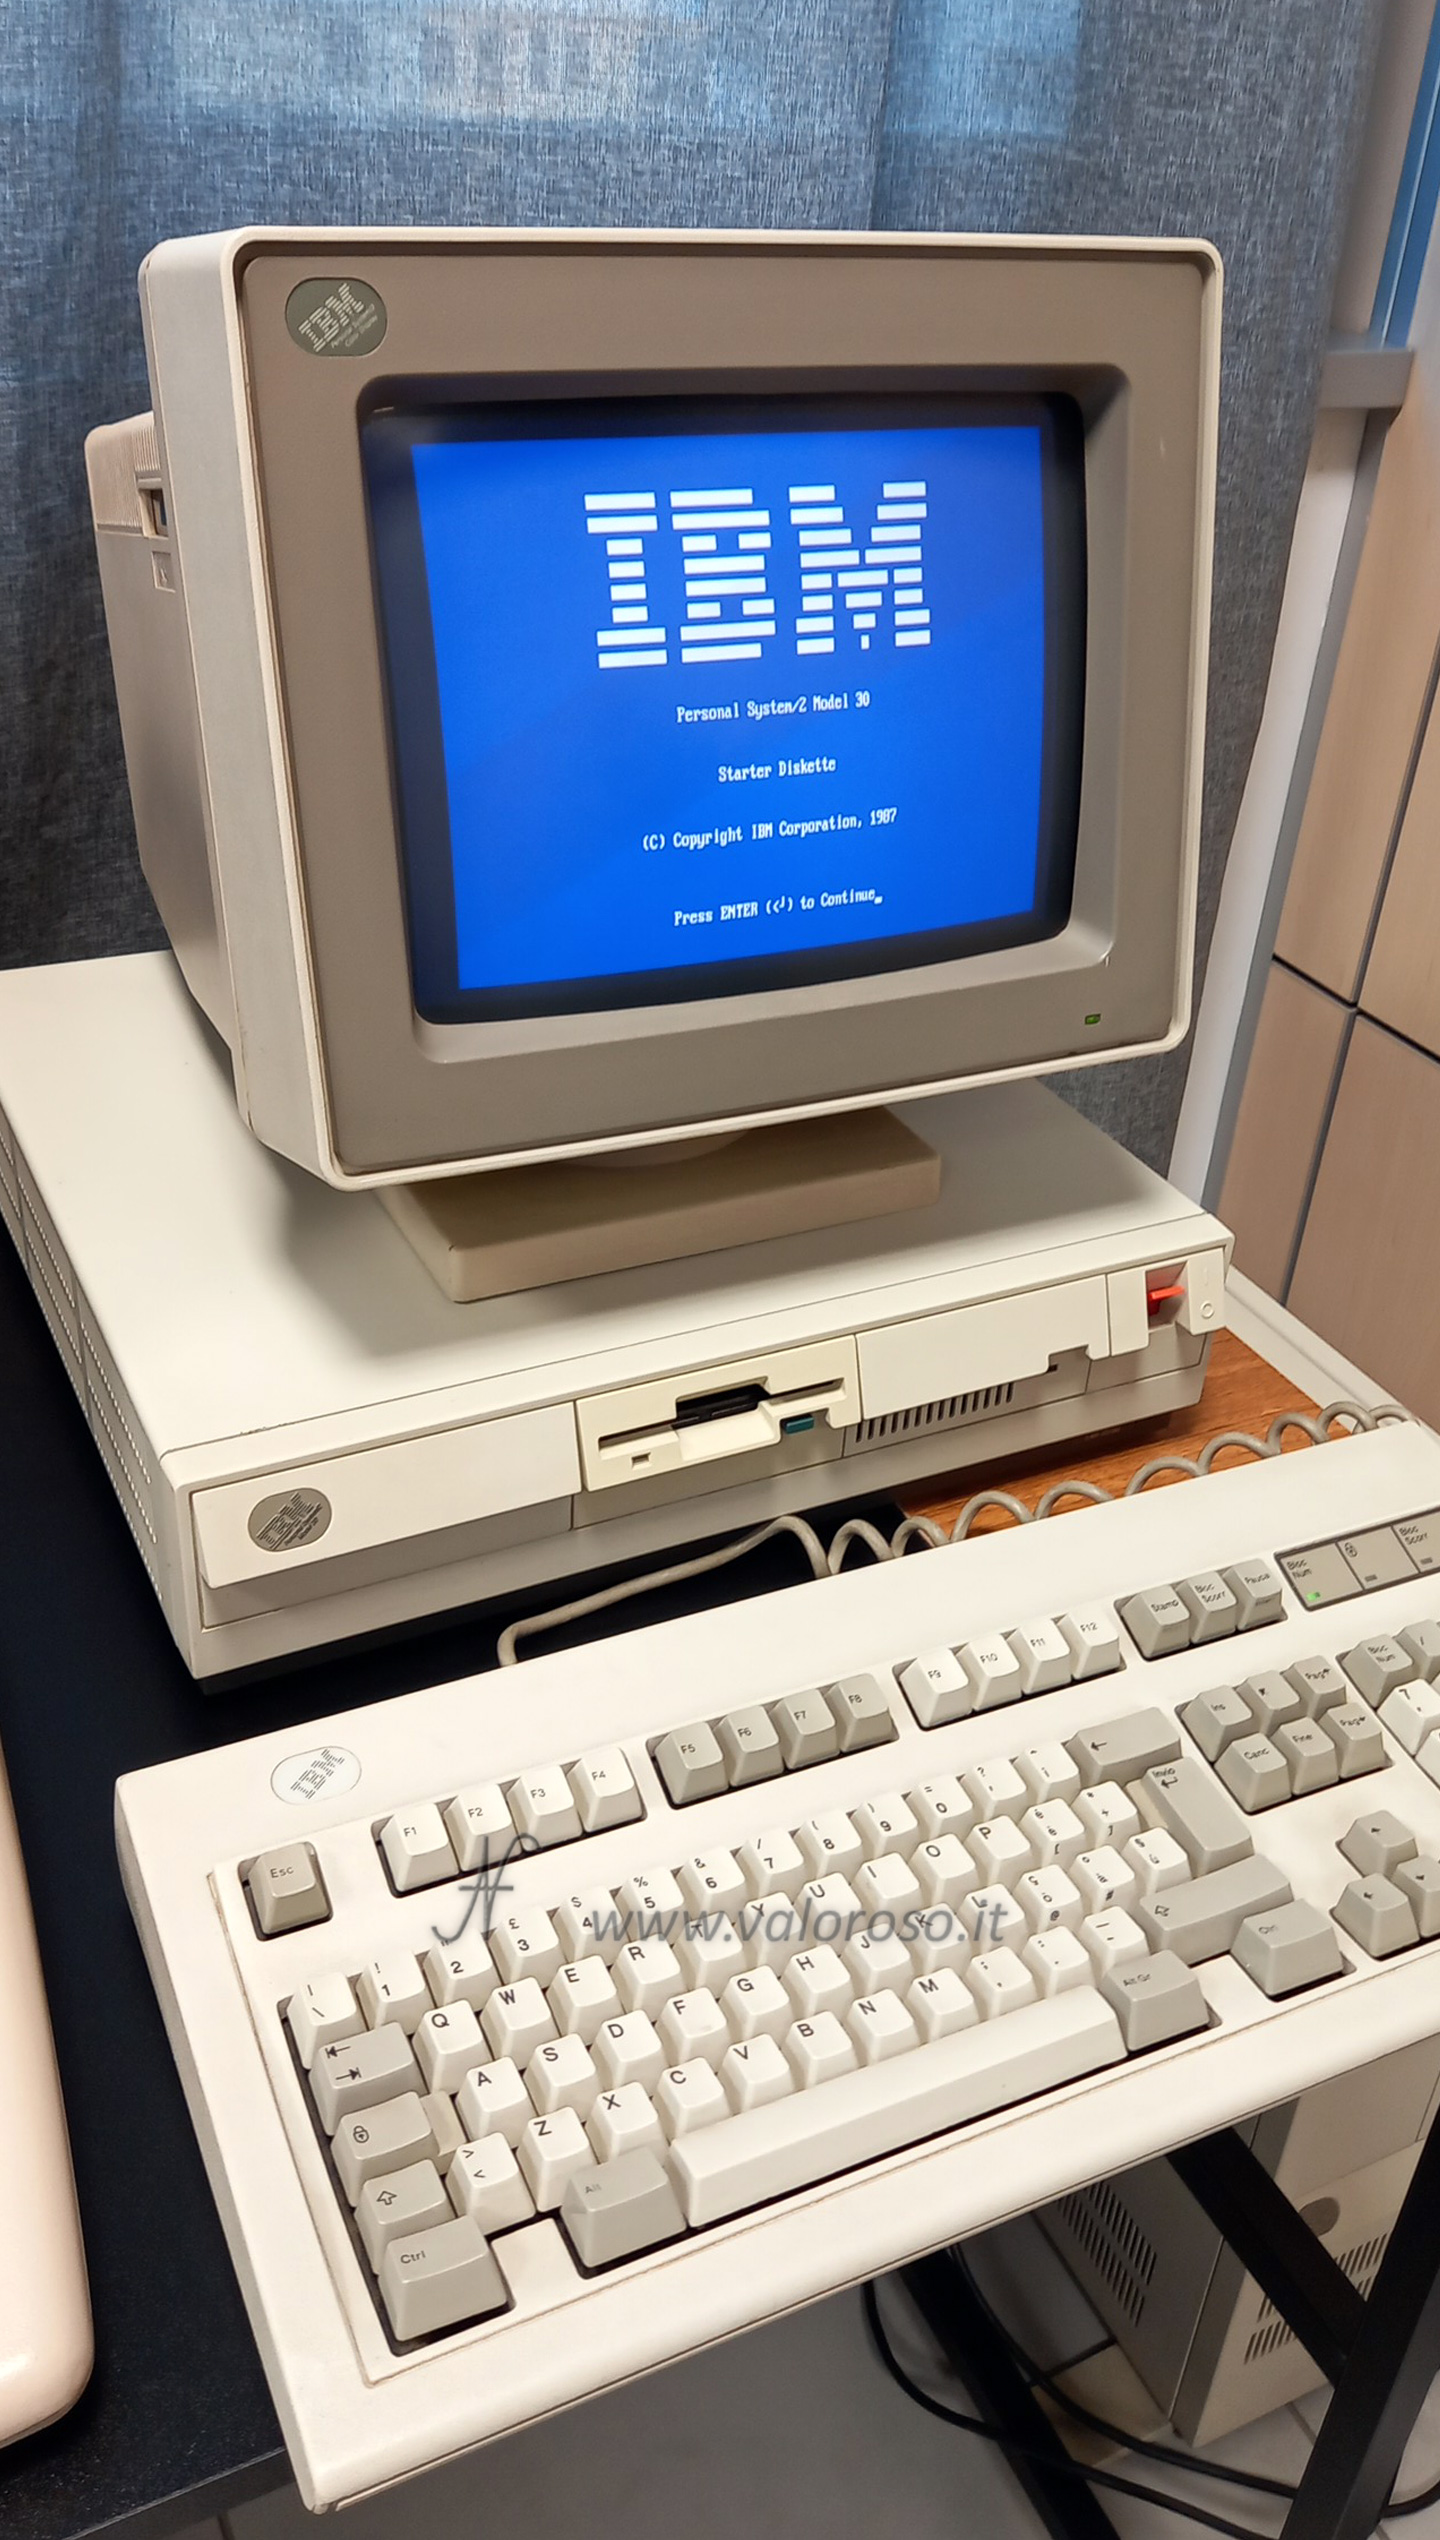 IBM PS2 model 30, Intel 8086, mechanical keyboard, VGA CRT monitor, acceso, International Business Machines, computer anni 80